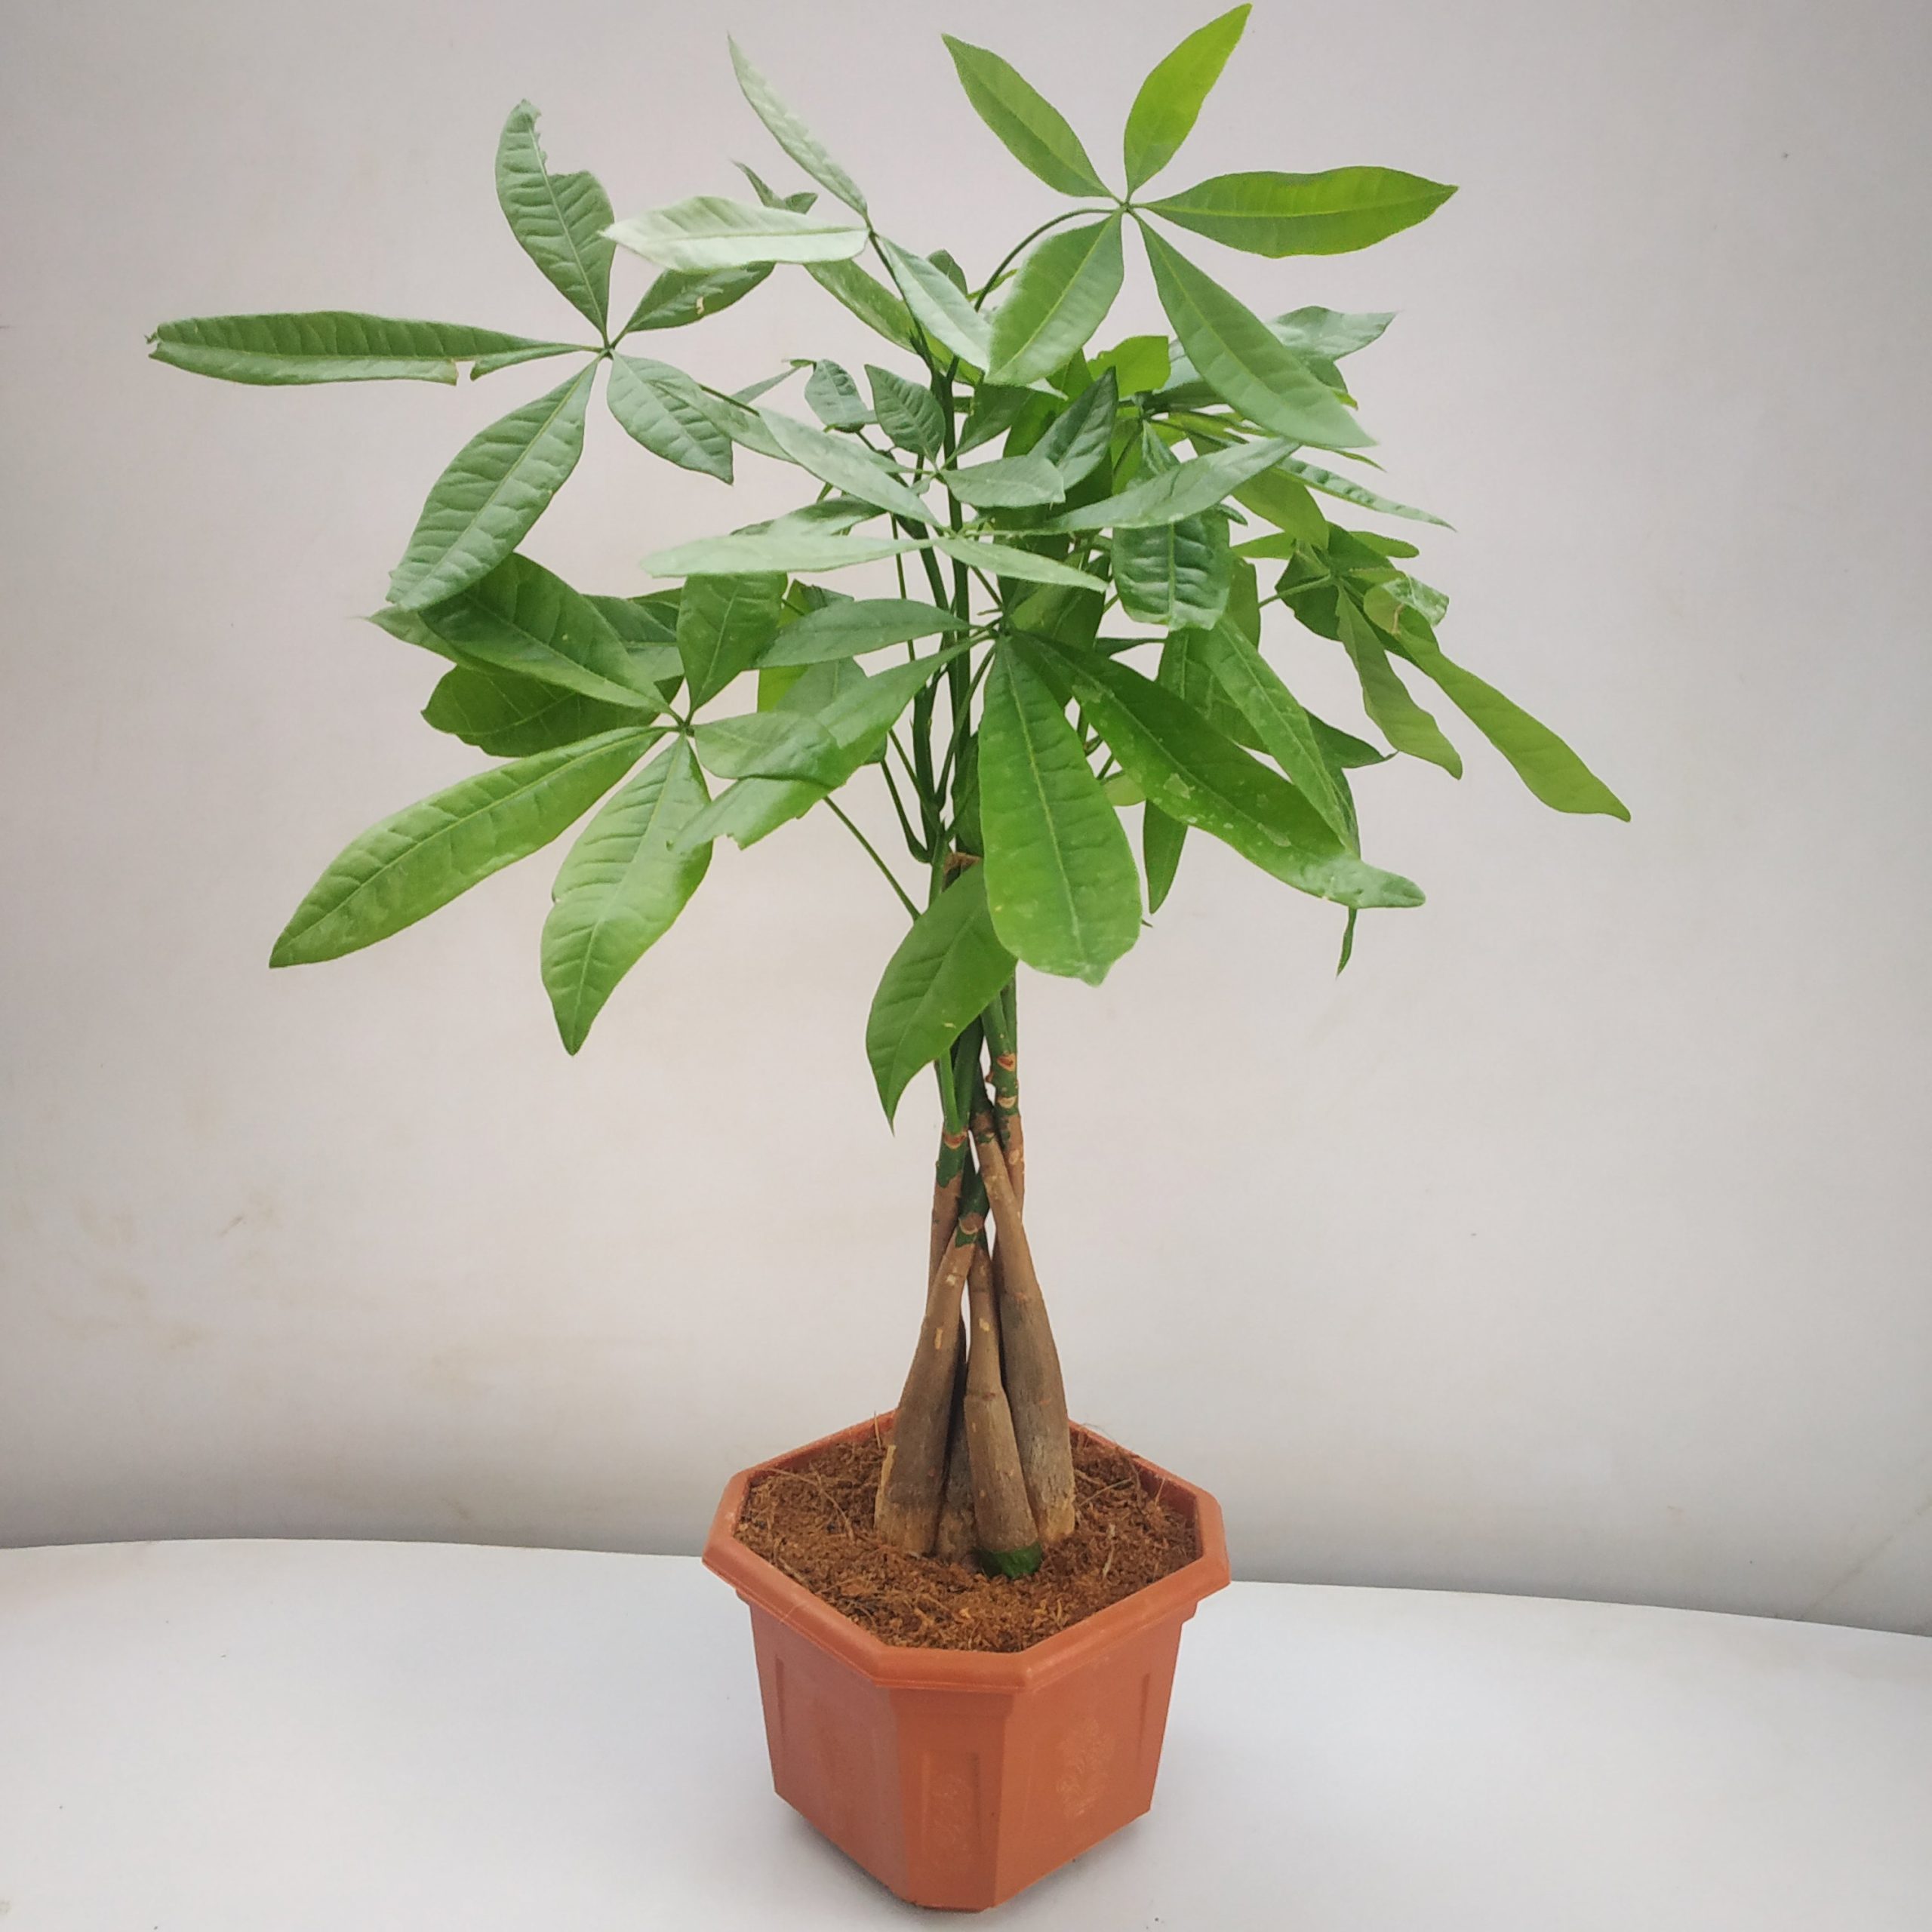 Pachira Aquatica 'Money Tree Bonsai' - NurseryBuy